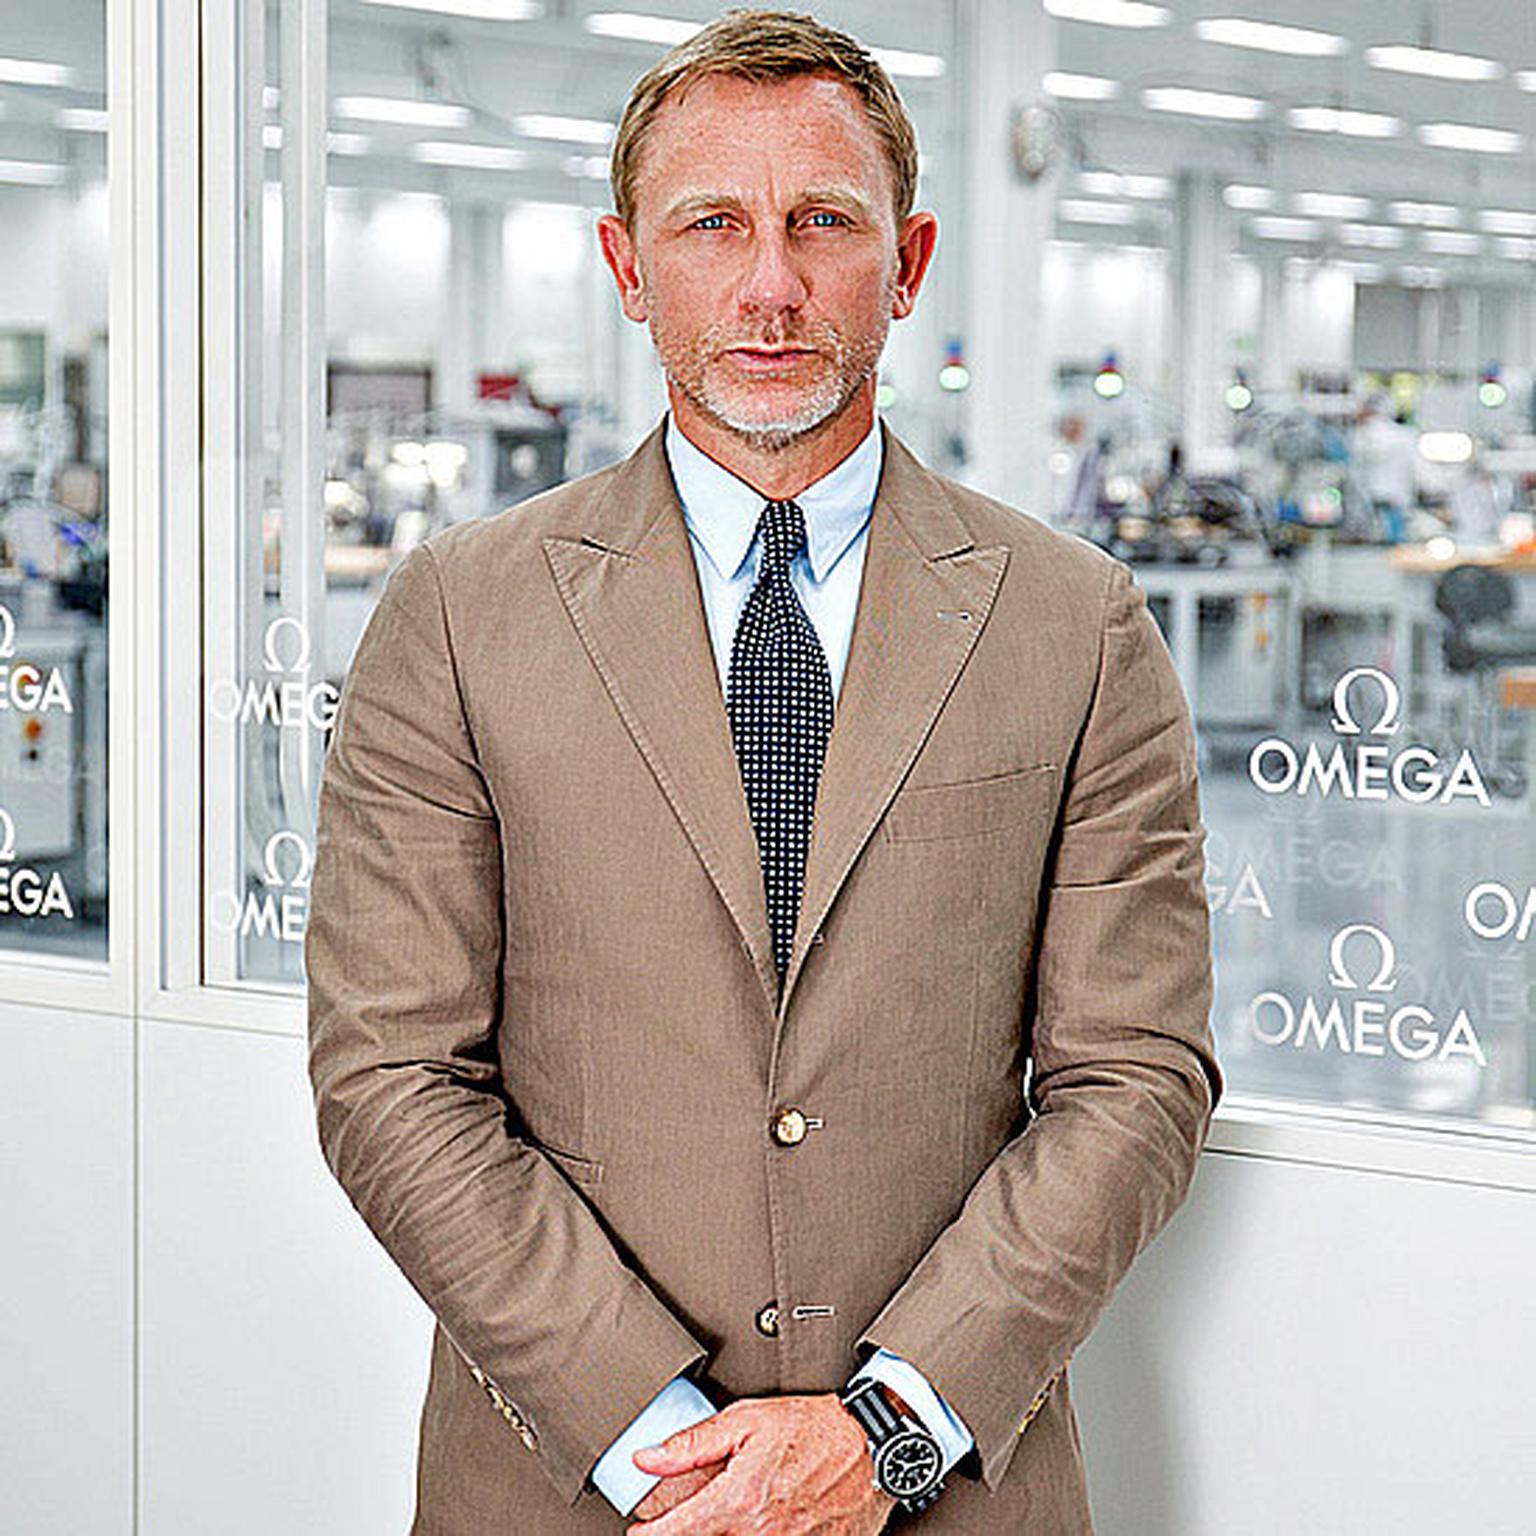 Daniel Craig at Omega manufacture wearing the Omega Seamaster Spectre